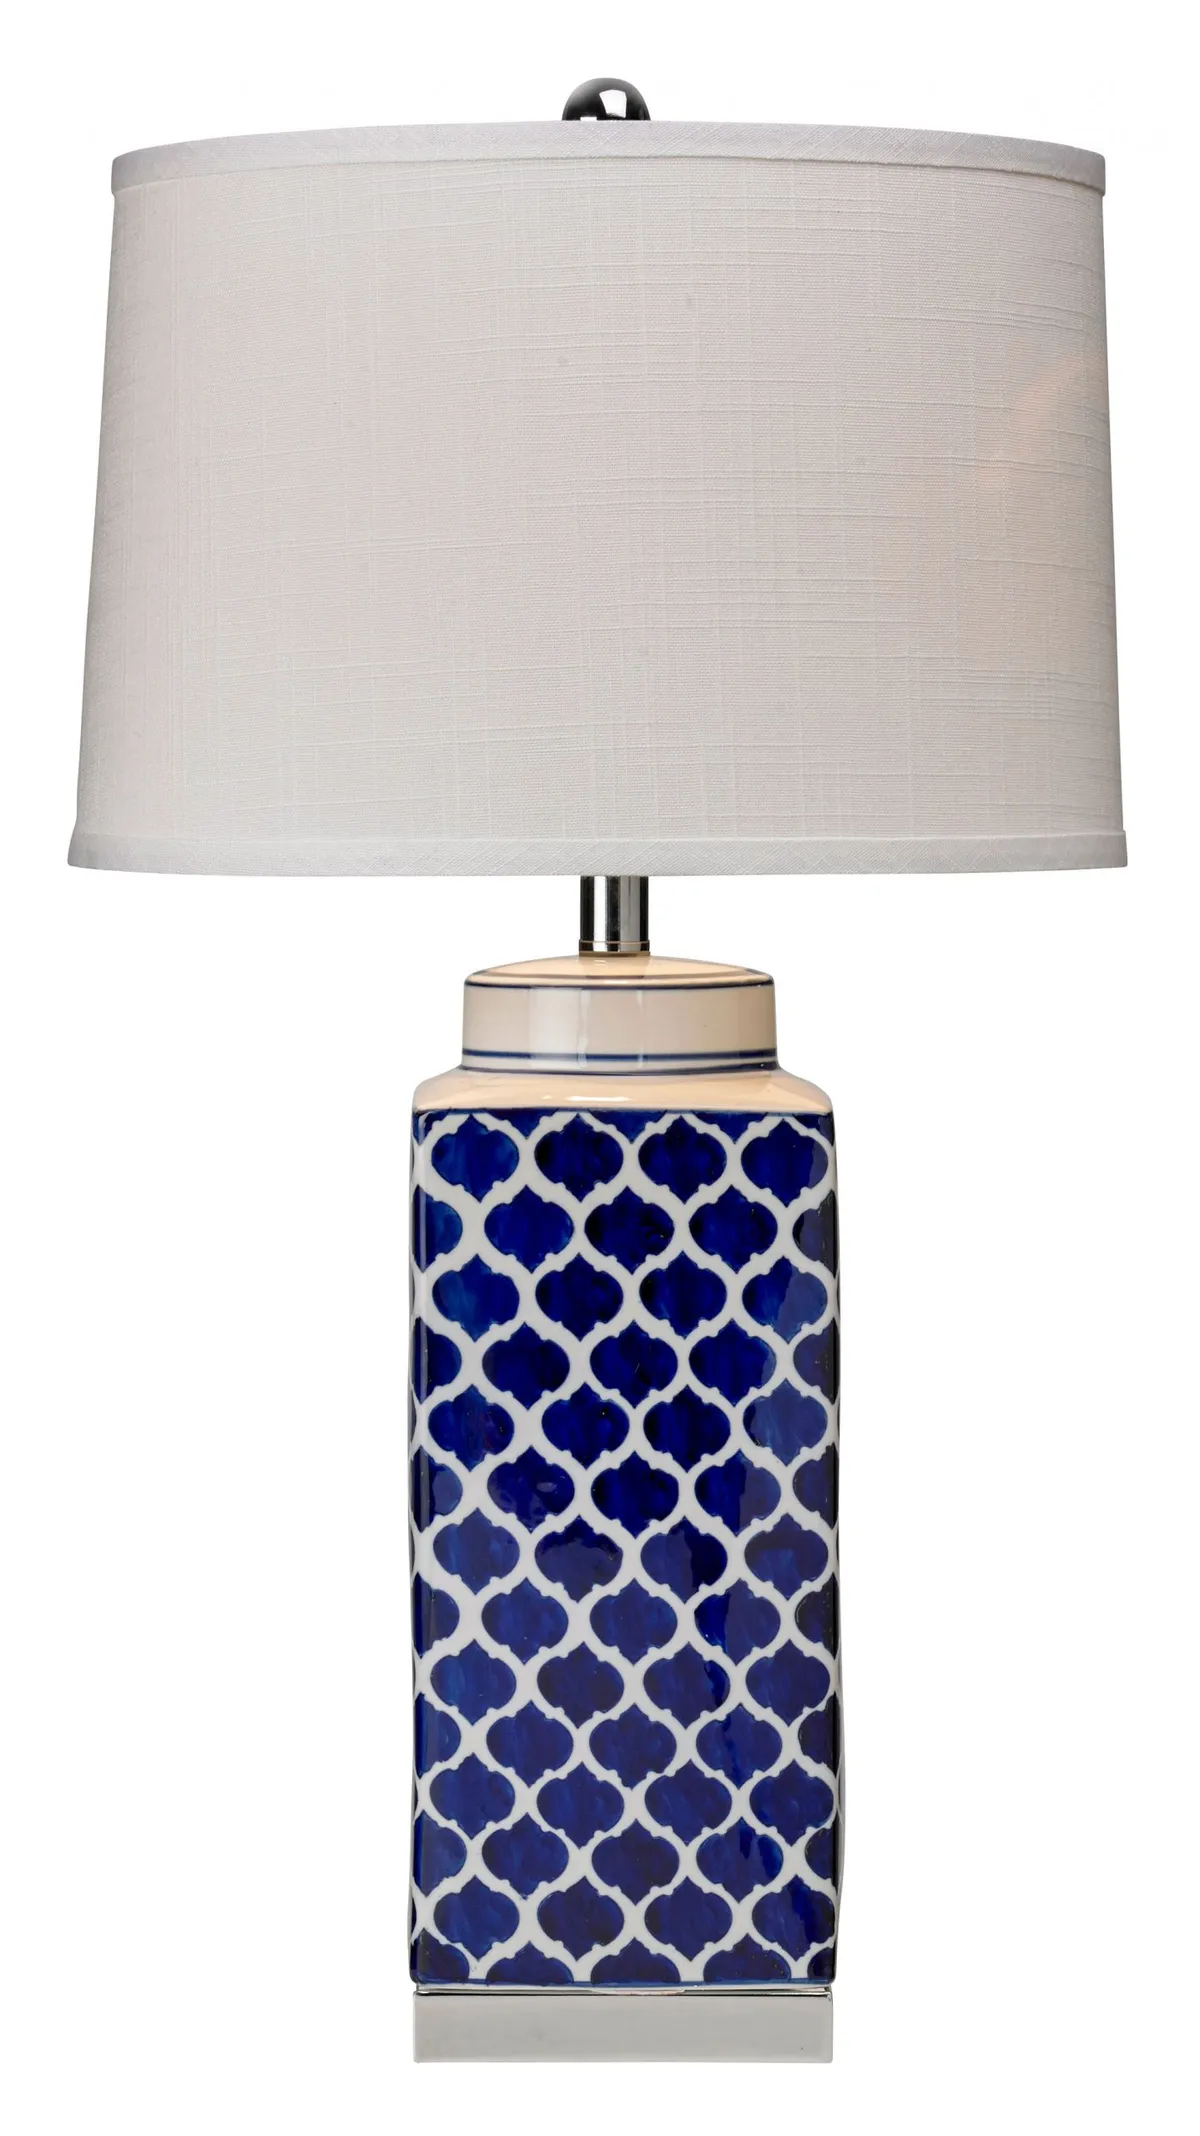 Wayfair blue and white lamp